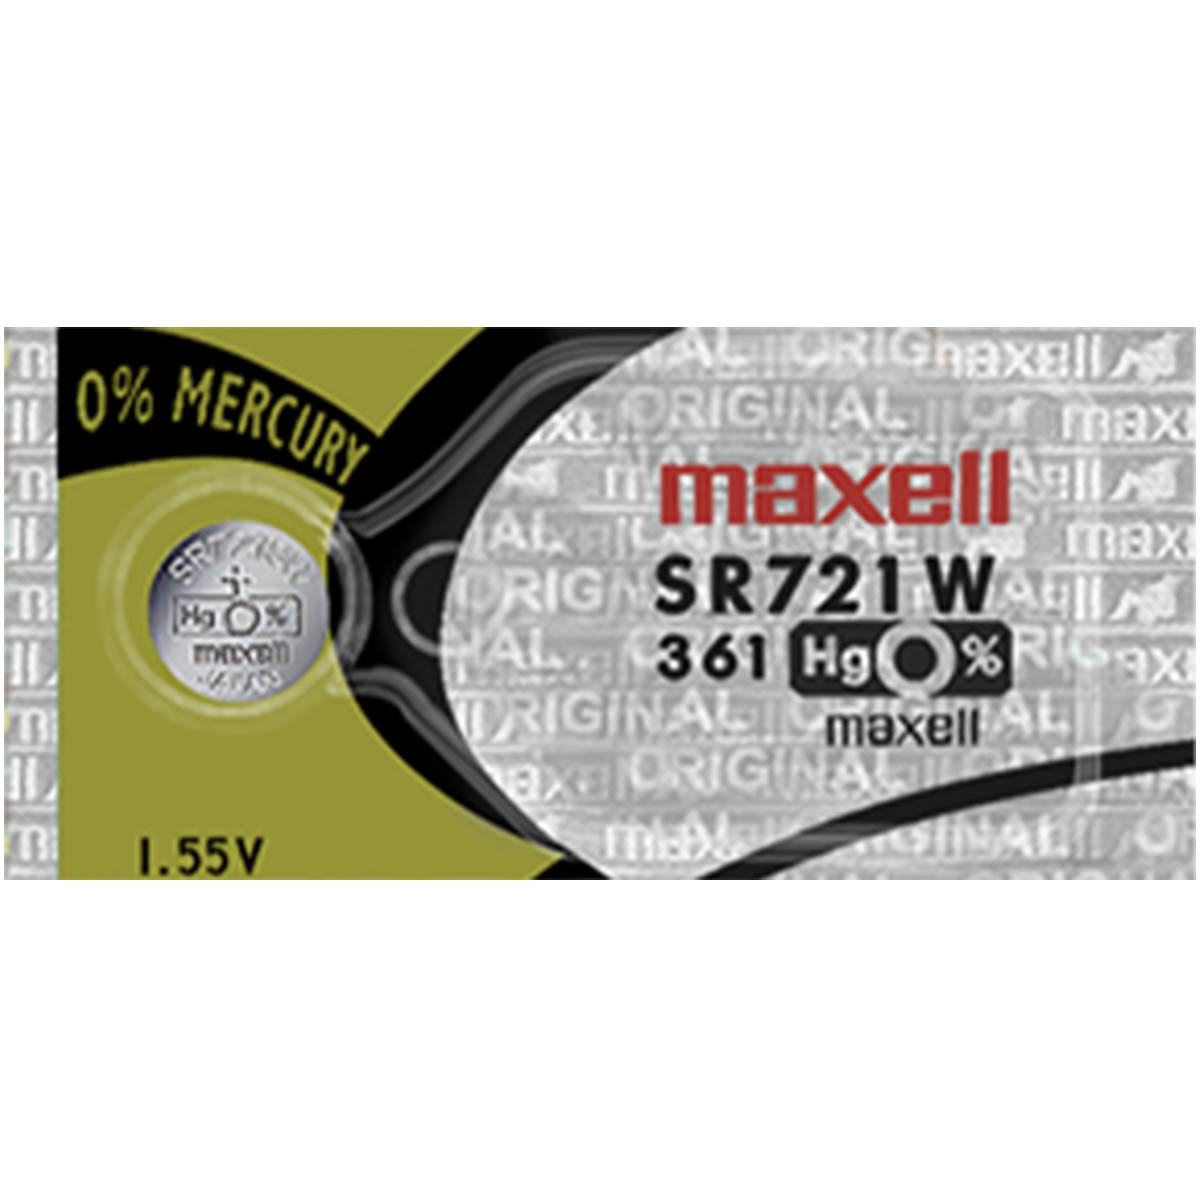 Maxell 361 Watch Battery (SR721W) Silver Oxide 1.55V